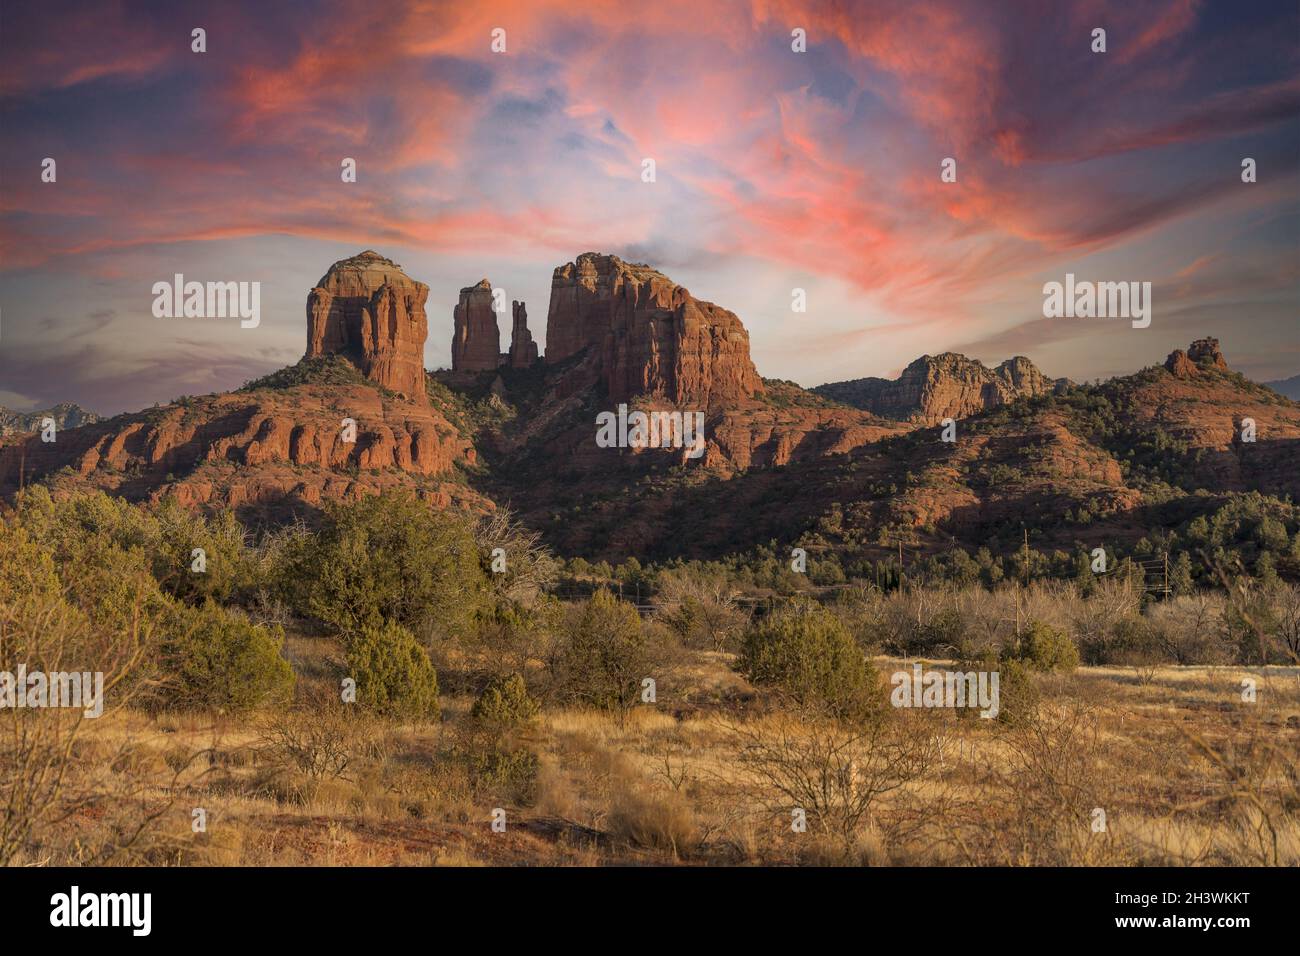 American Desert Rock Formations Stock Photo